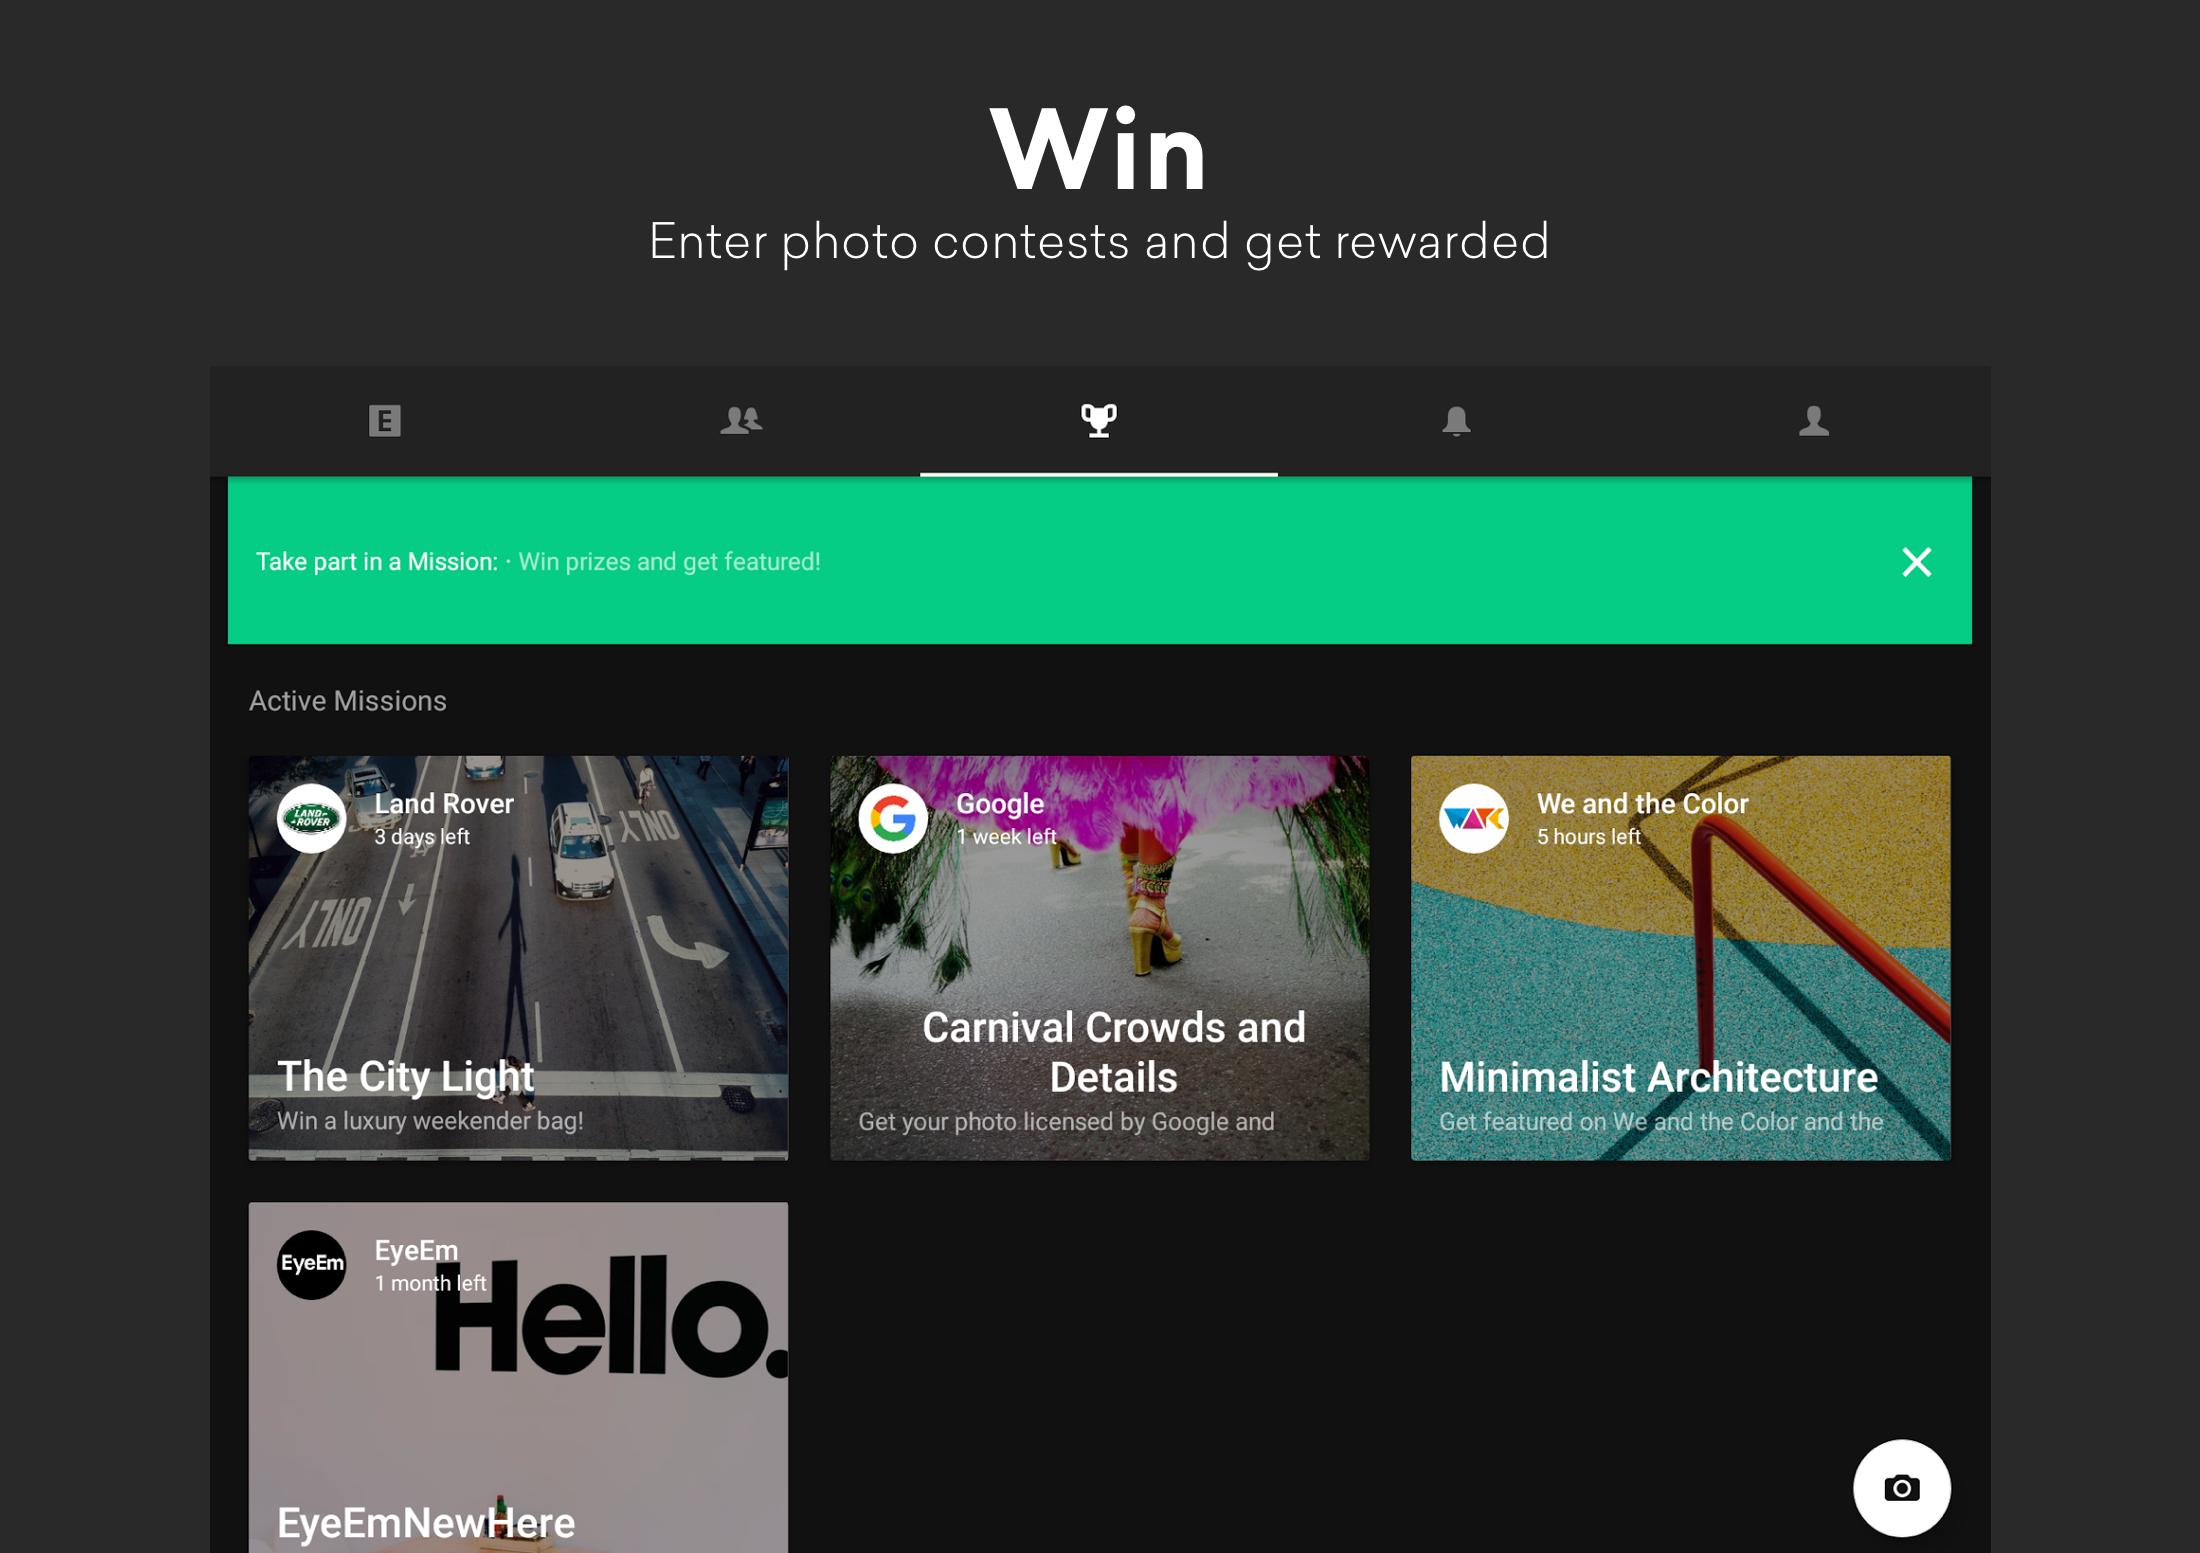 EyeEm Free Photo App For Sharing & Selling Images 8.1 Screenshot 12